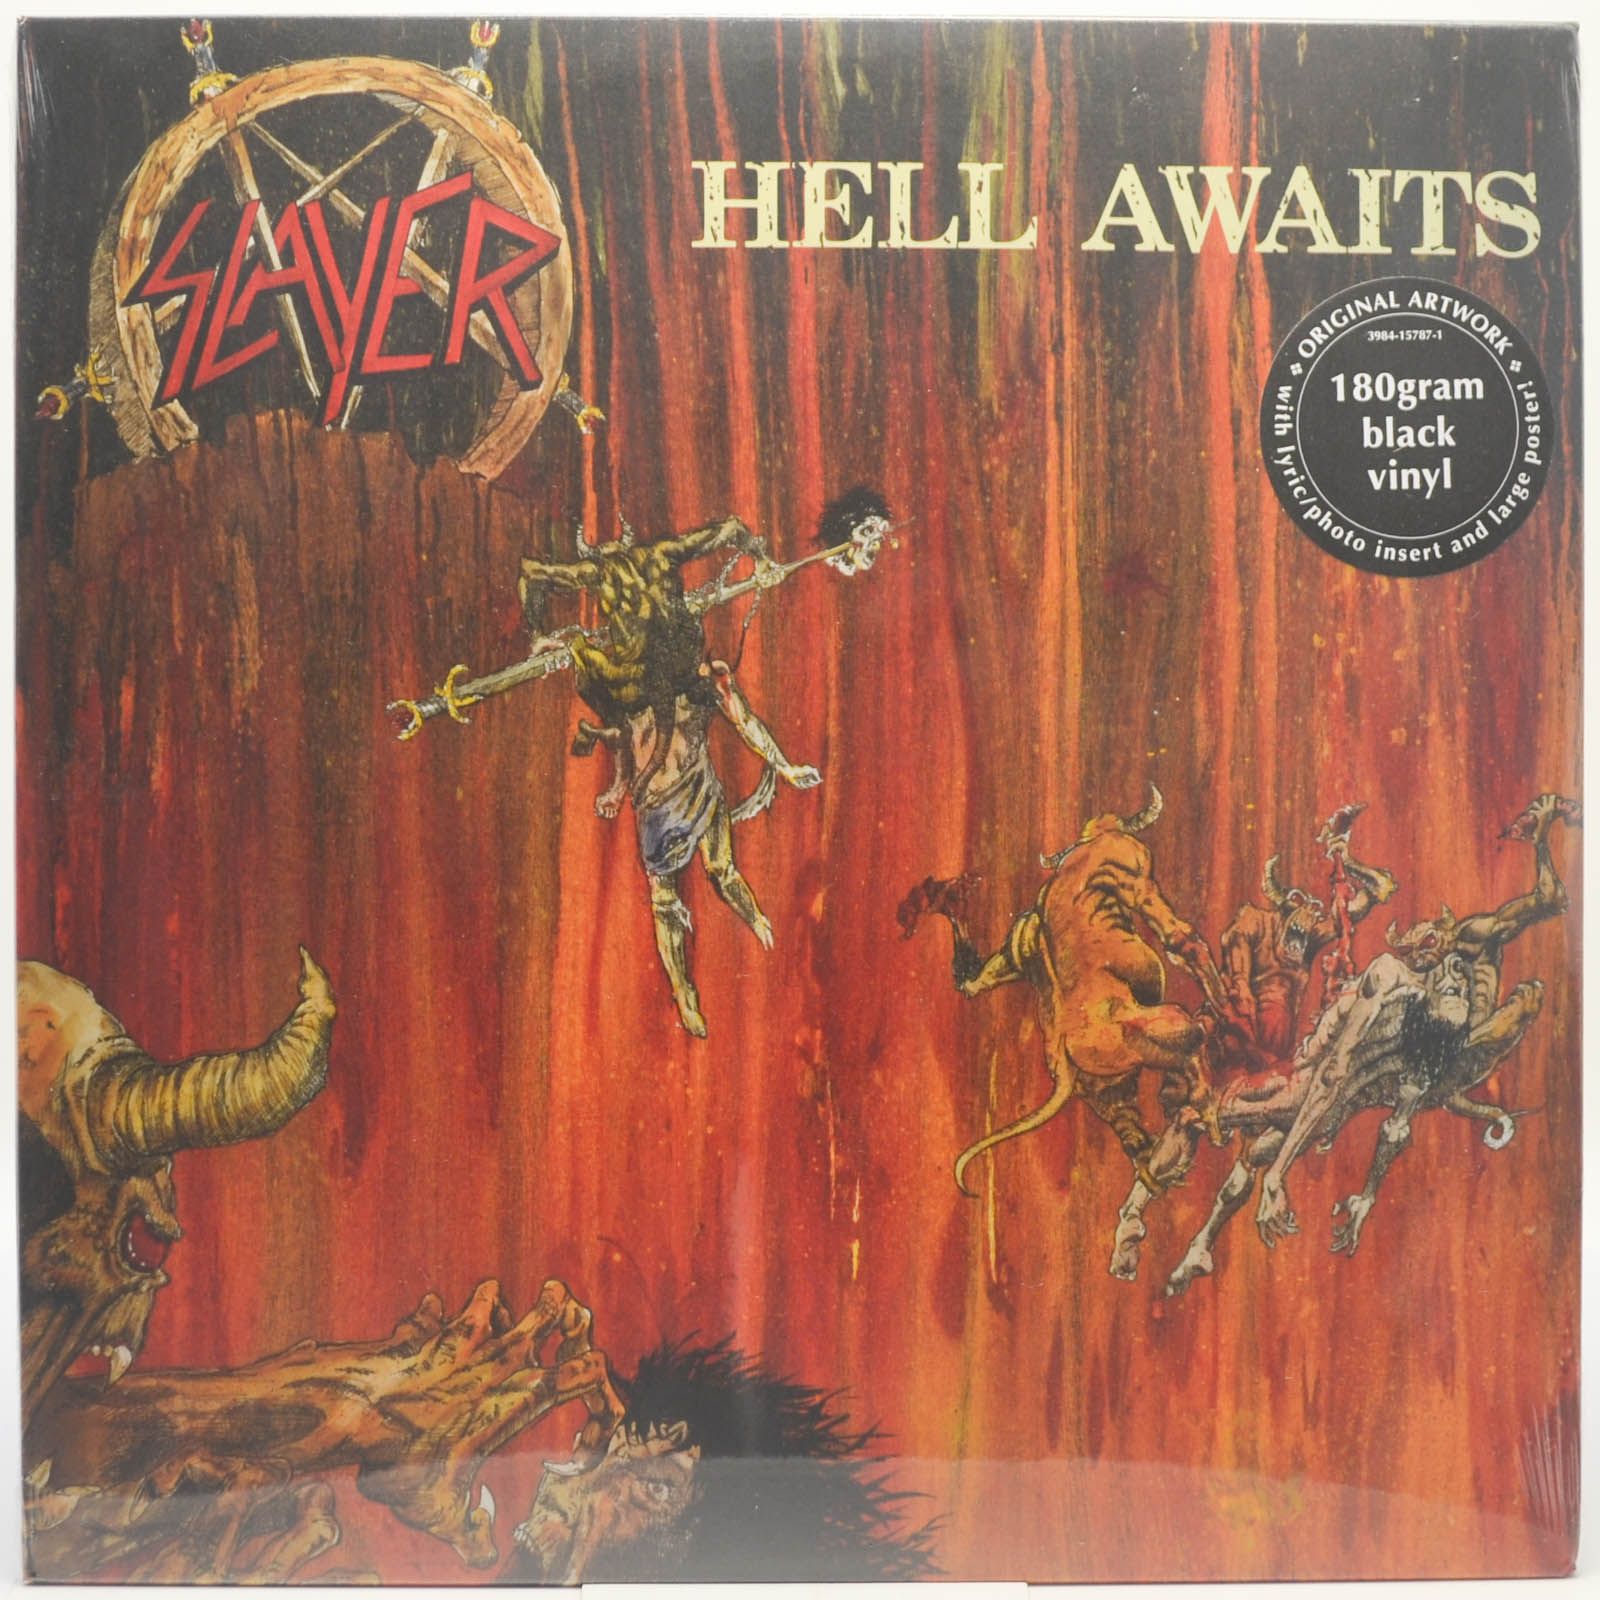 Hell Awaits, 1985